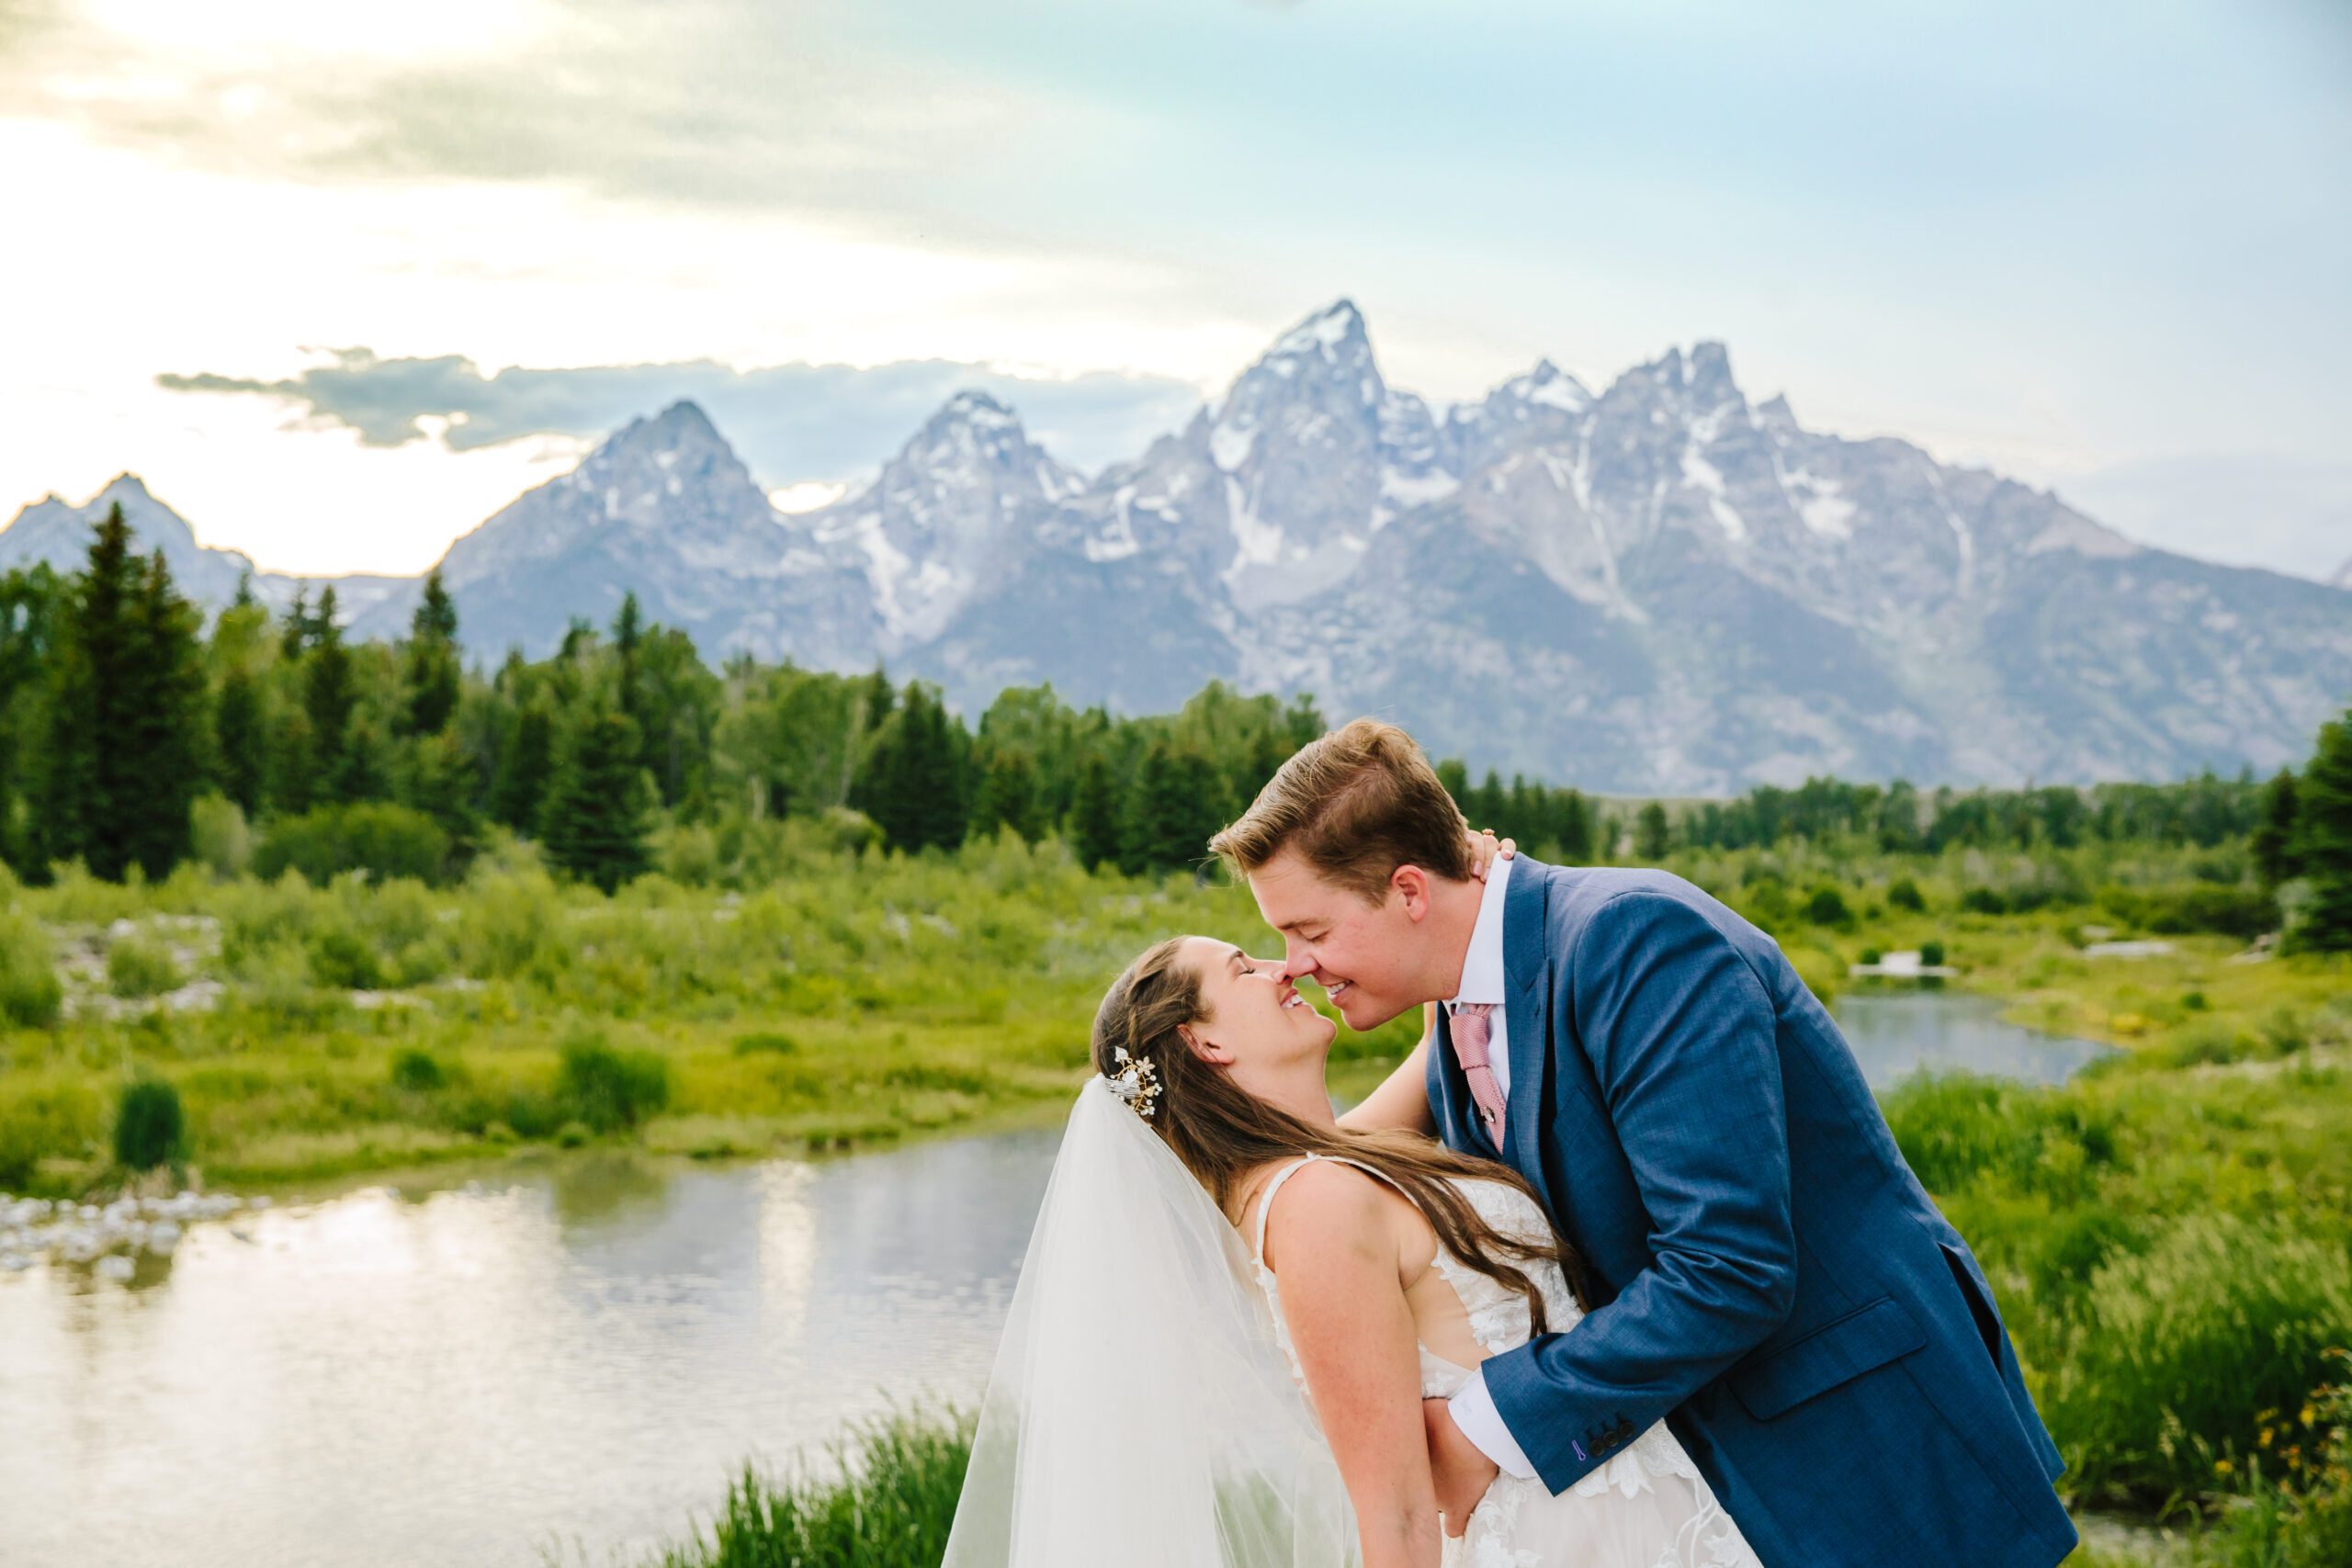 Jackson Hole photographers captures couple kissing in Grand Teton National Park after sustainable Jackson Hole elopement